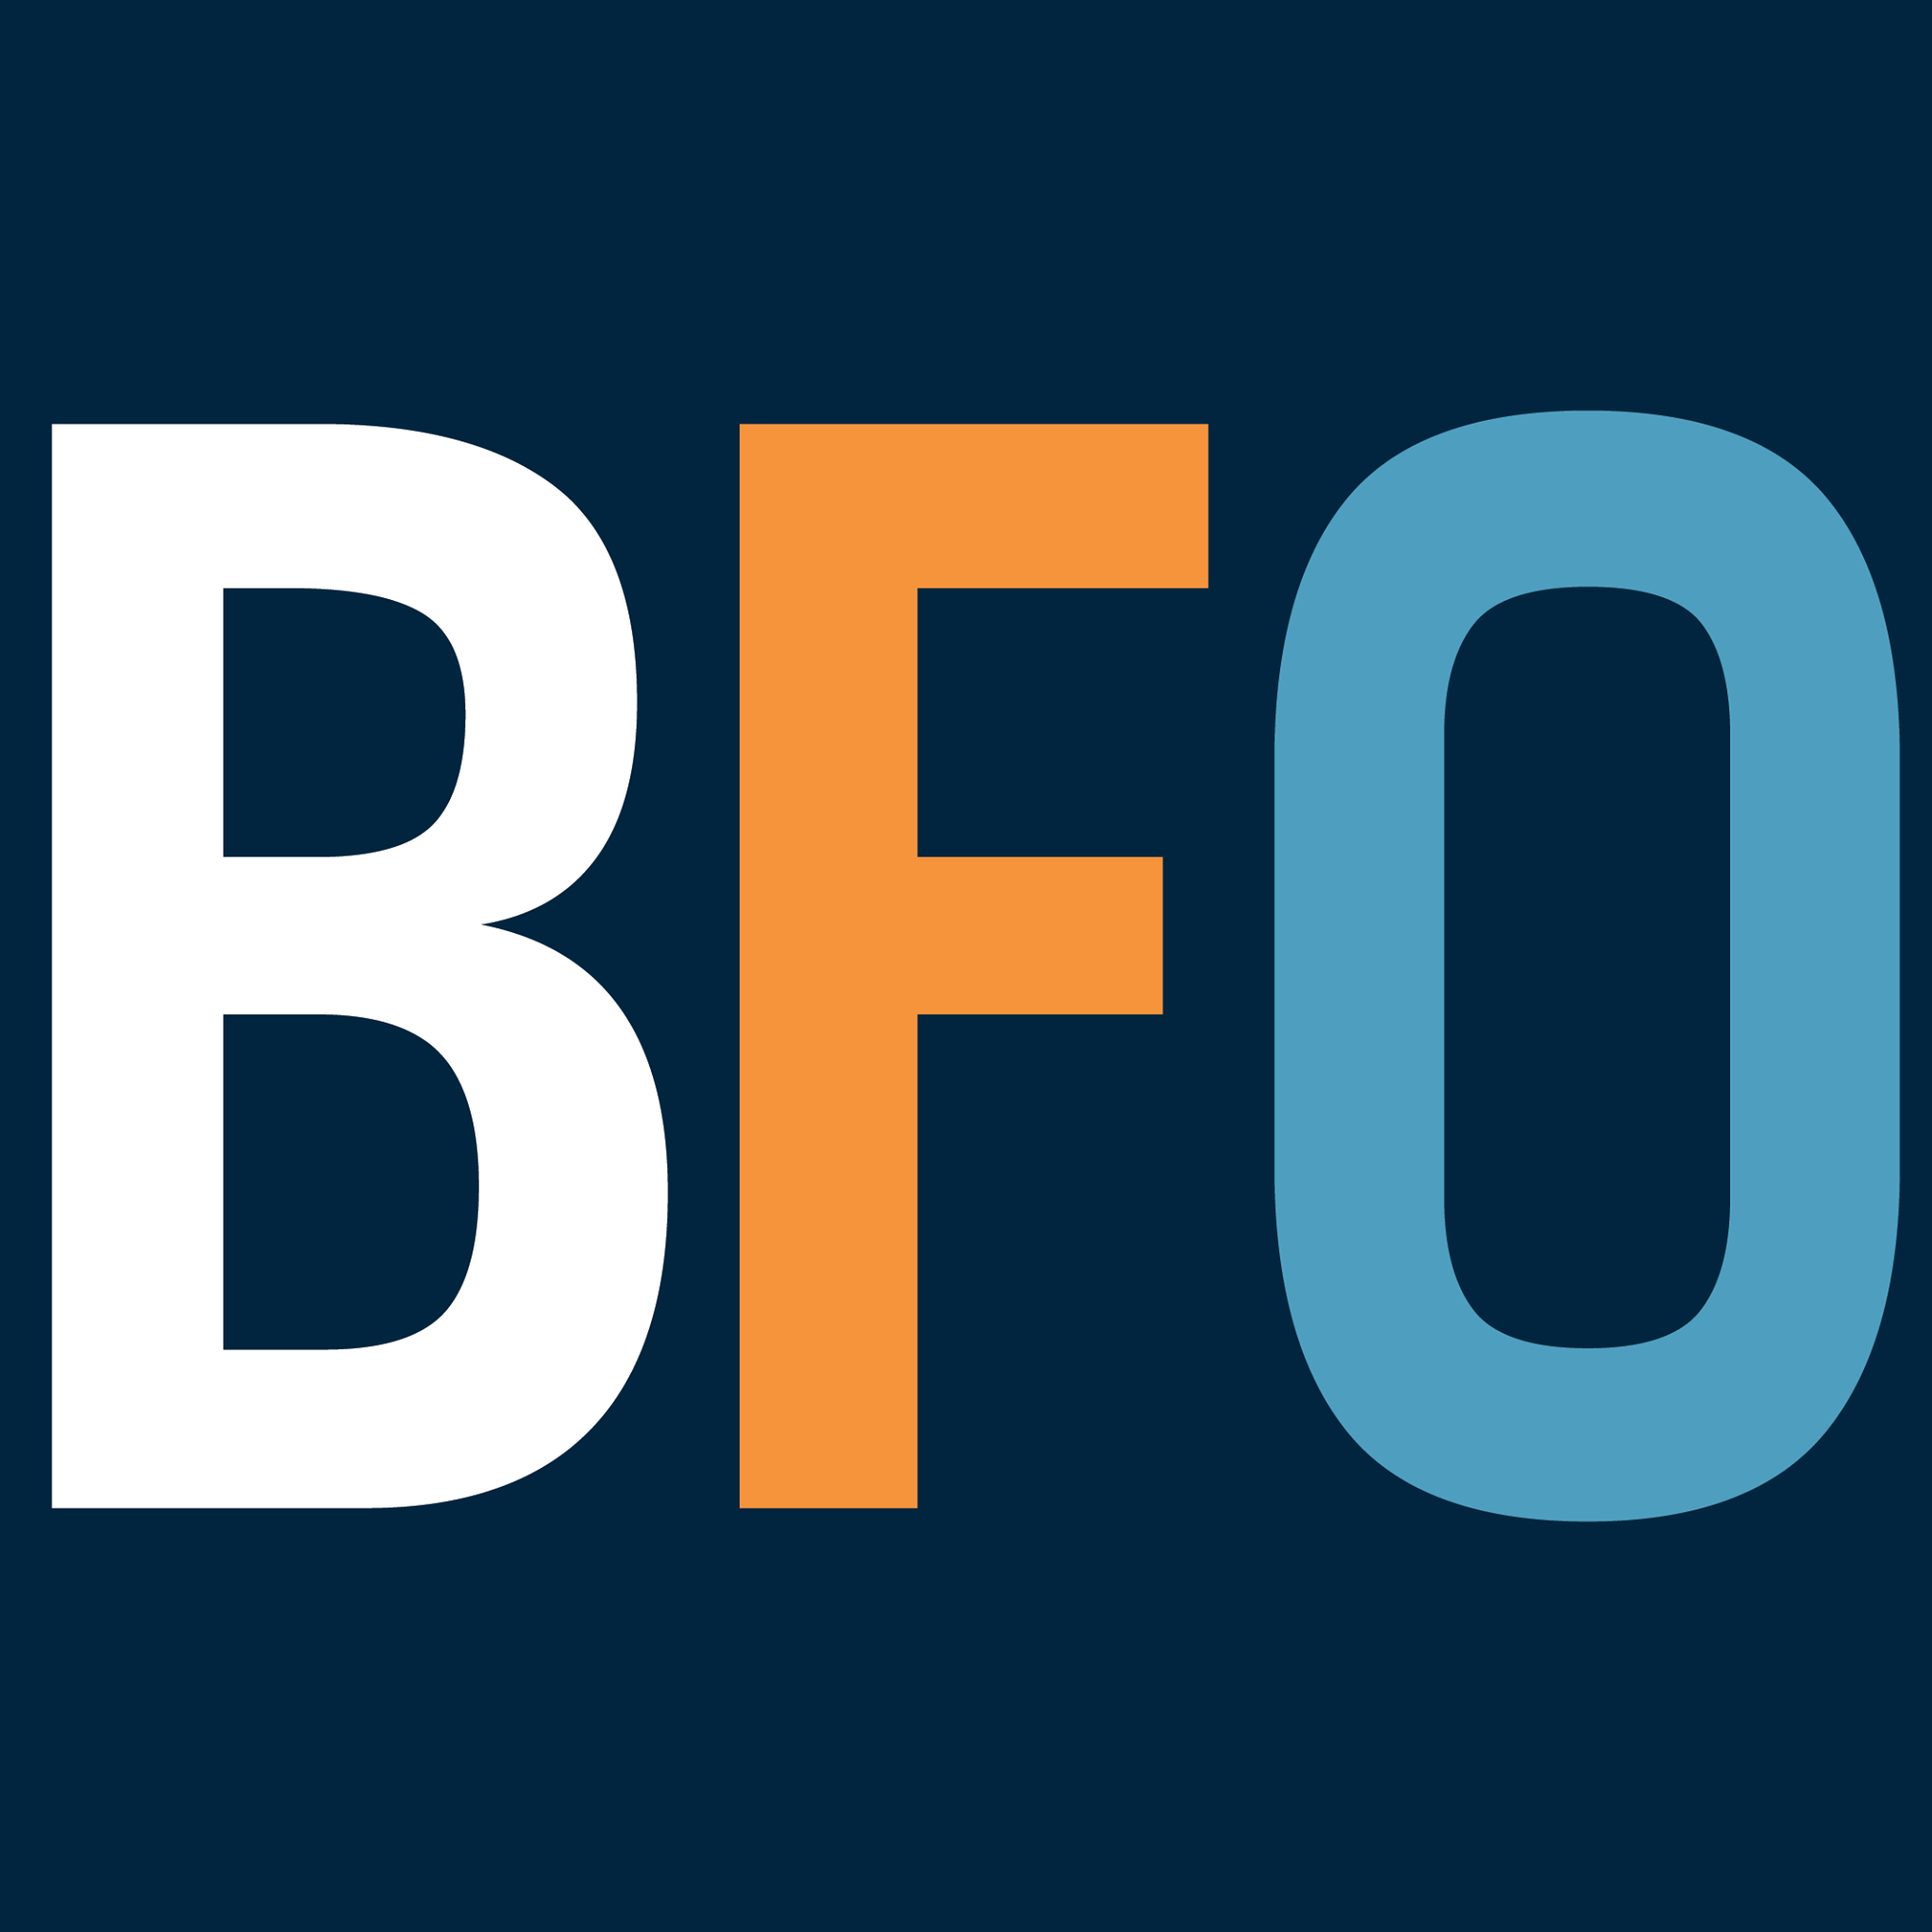 Company logo of Be Found Online - BFO